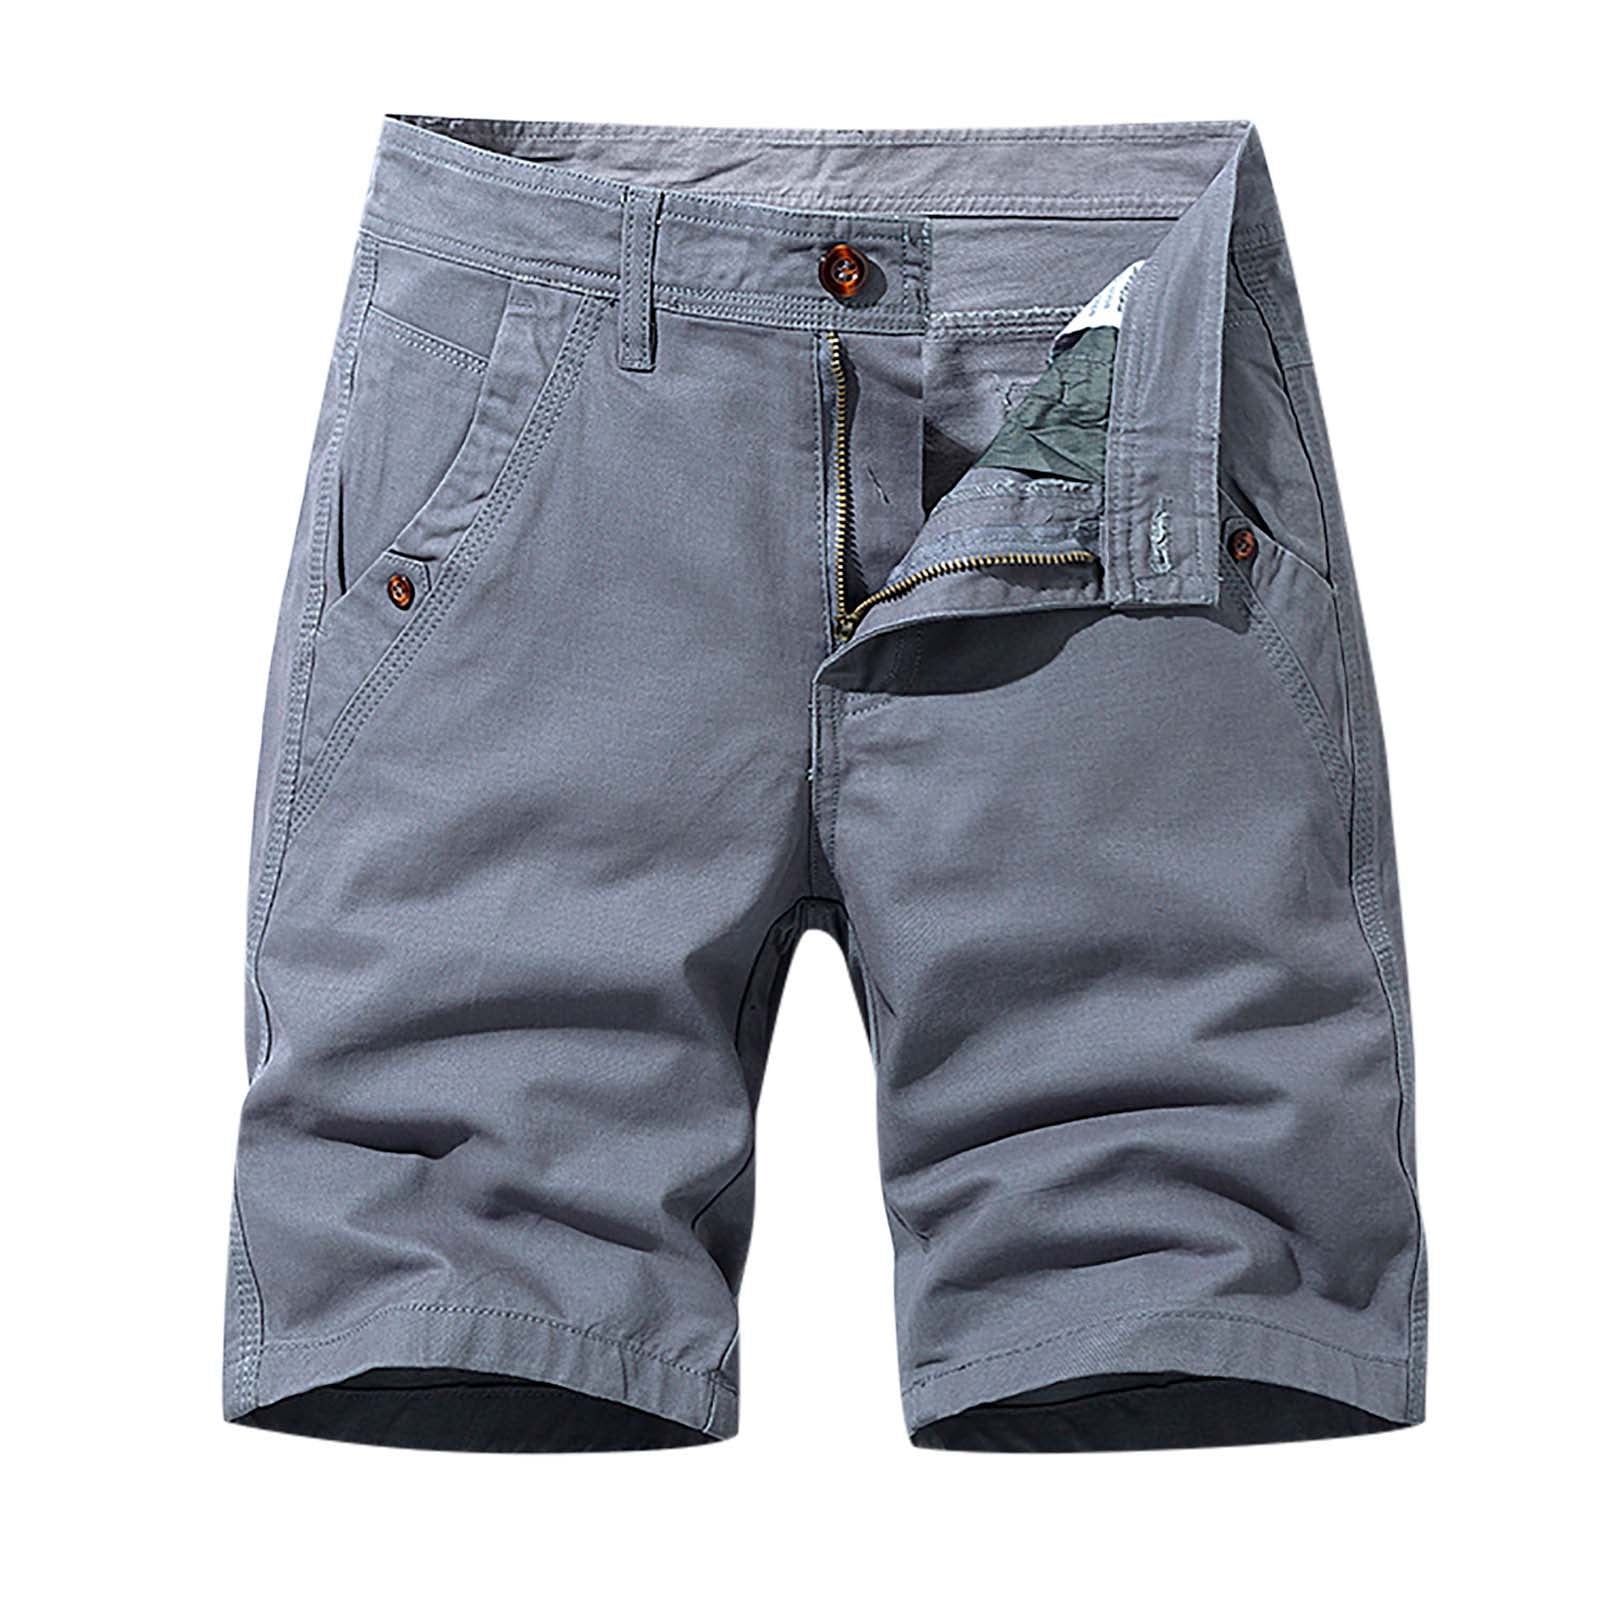 AOOCHASLIY Shorts Men Clearance Men's Shorts Multi Pocket Cargo Pants ...